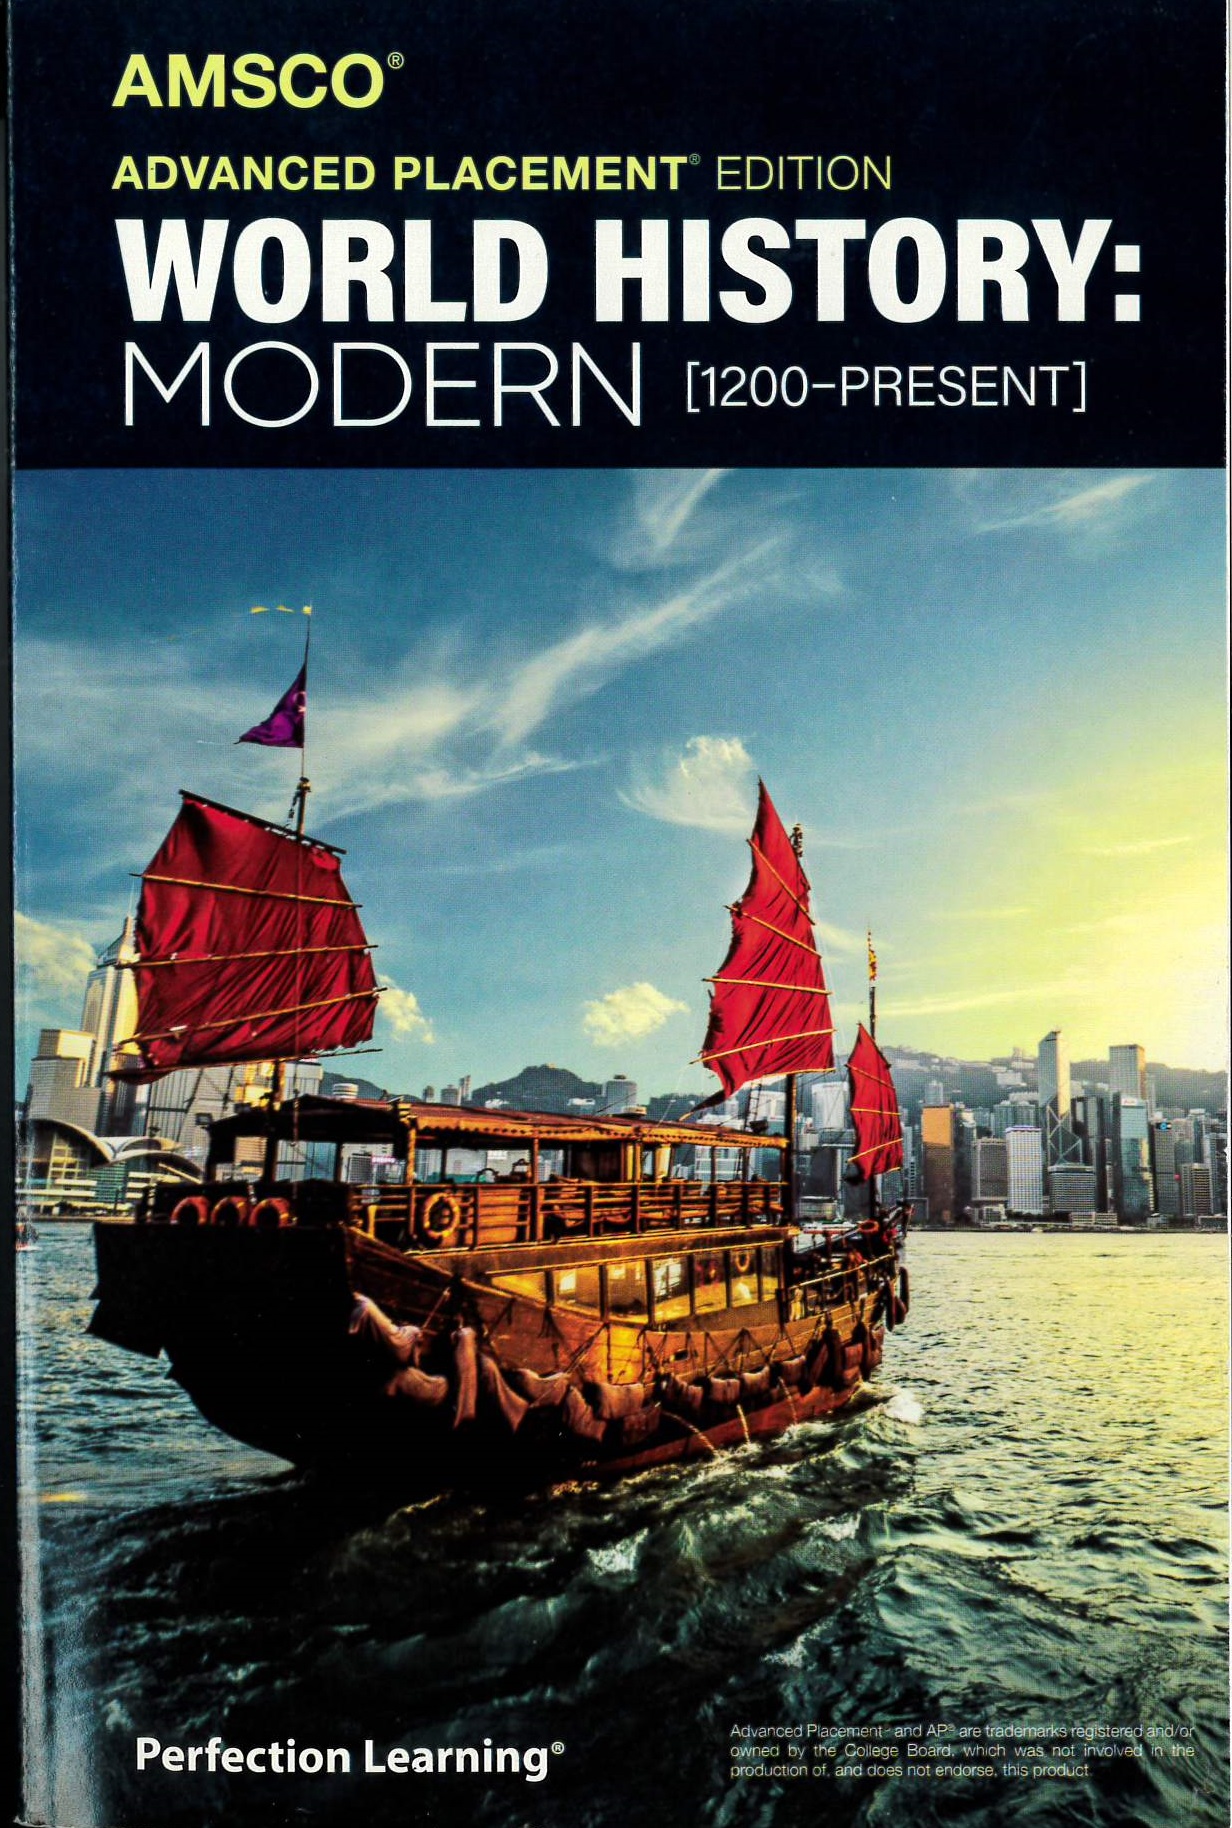 Advanced placement world history : modern [1200-present]